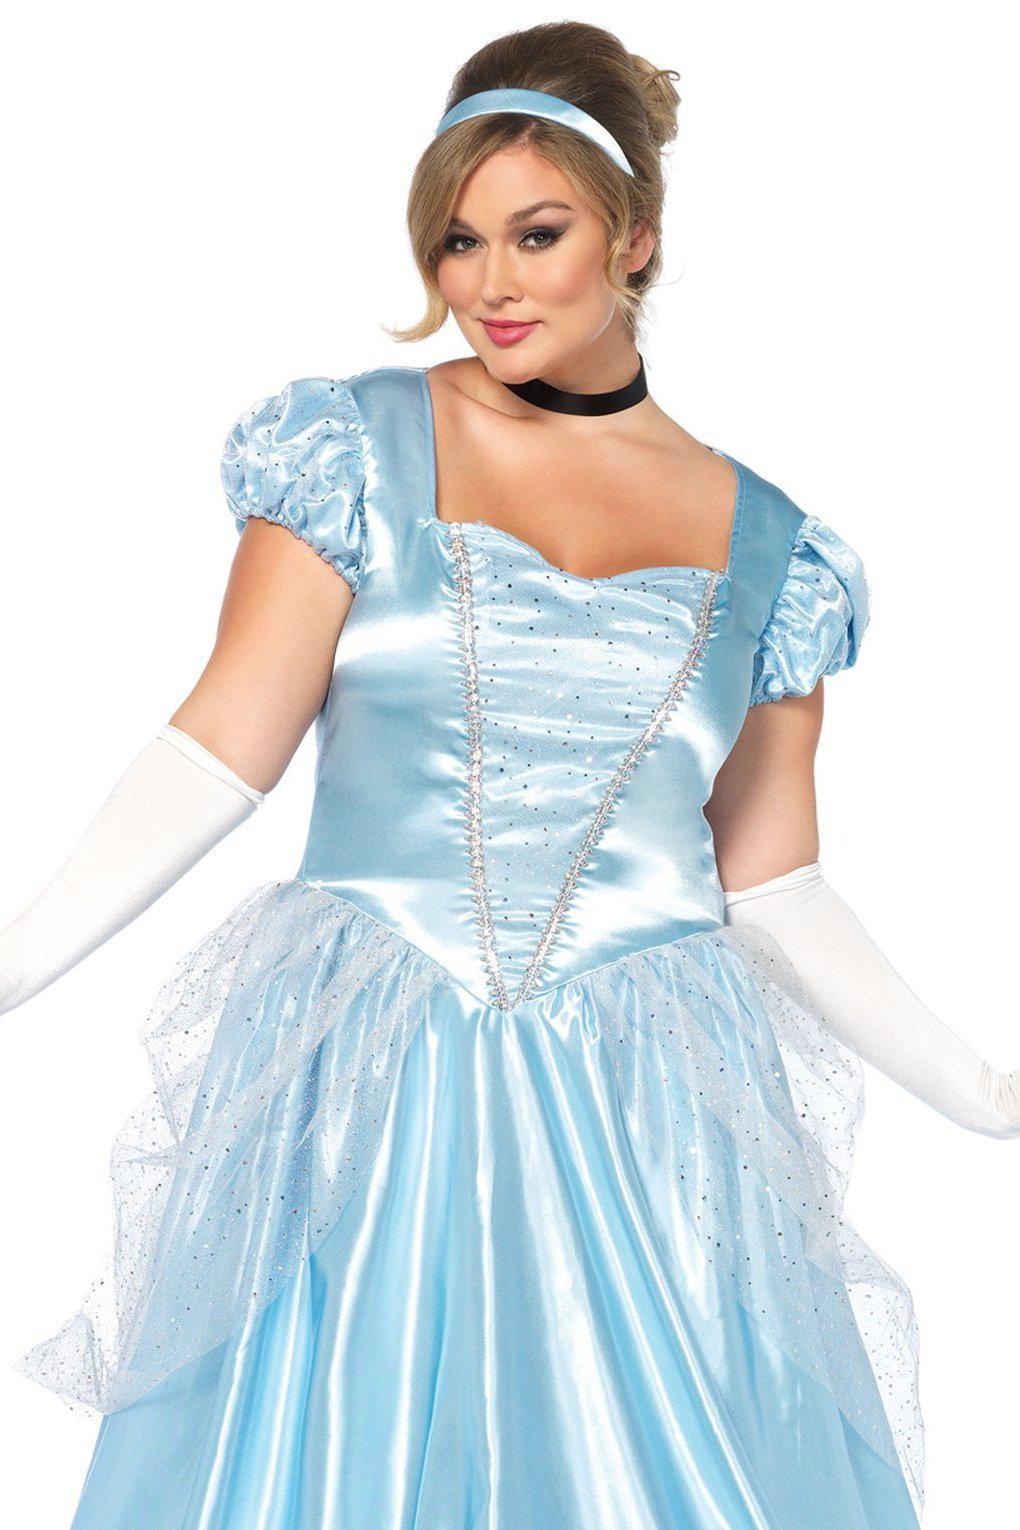 Plus Size Classic Cinderella Costume-Princess Costumes-Leg Avenue-Blue-1/2XL-SEXYSHOES.COM